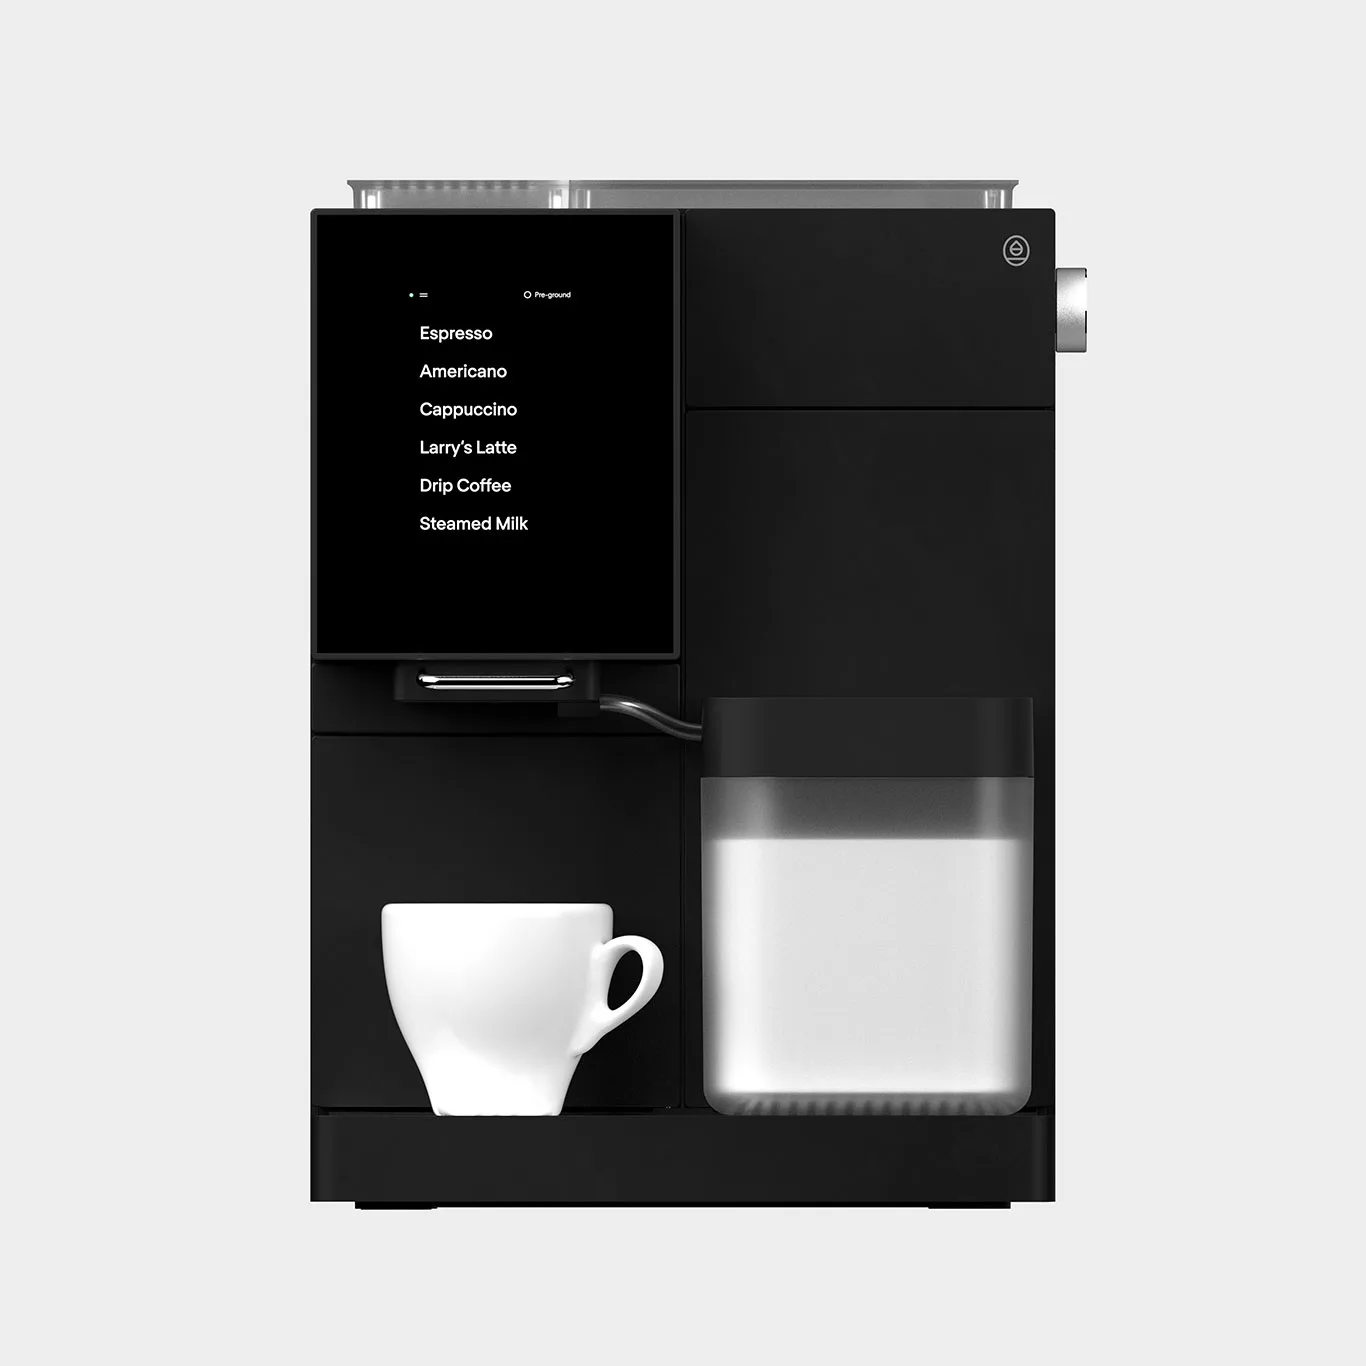 terra kaffe design collaboration sda entry sprudge 1